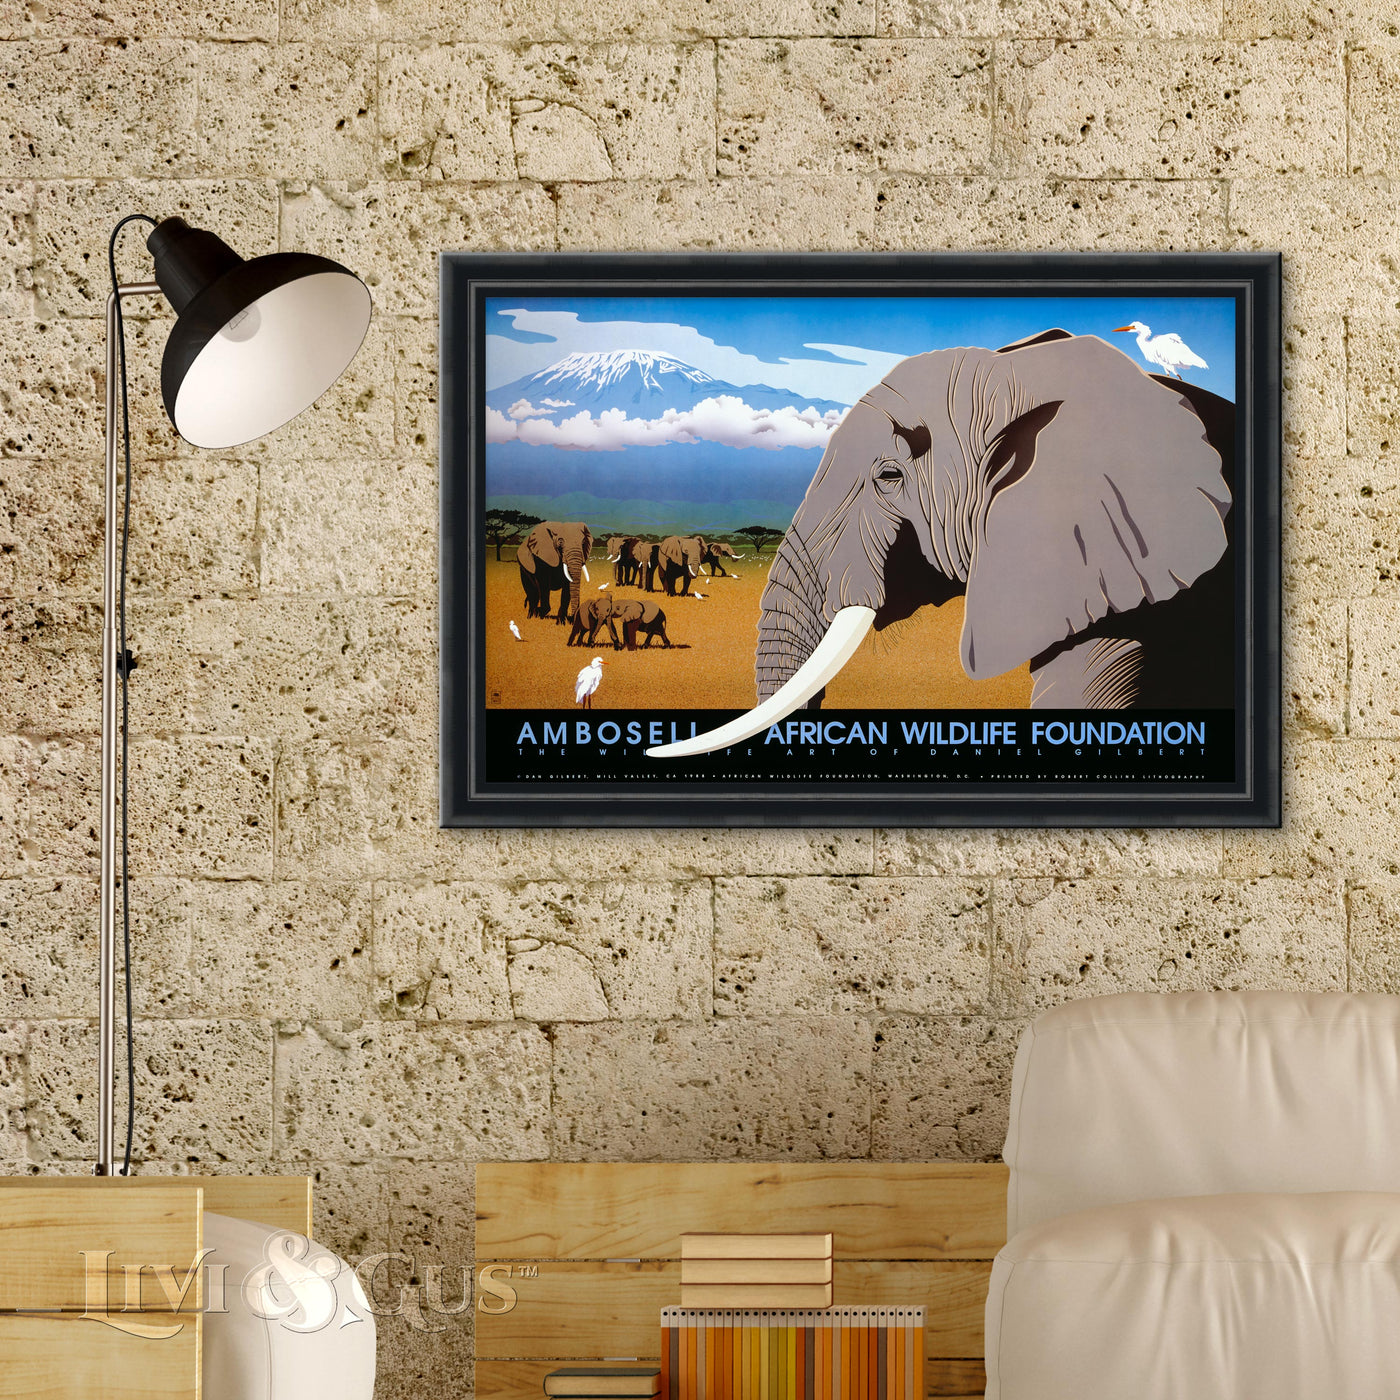 African Wildlife Foundation • Amboseli - by Dan Gilbert